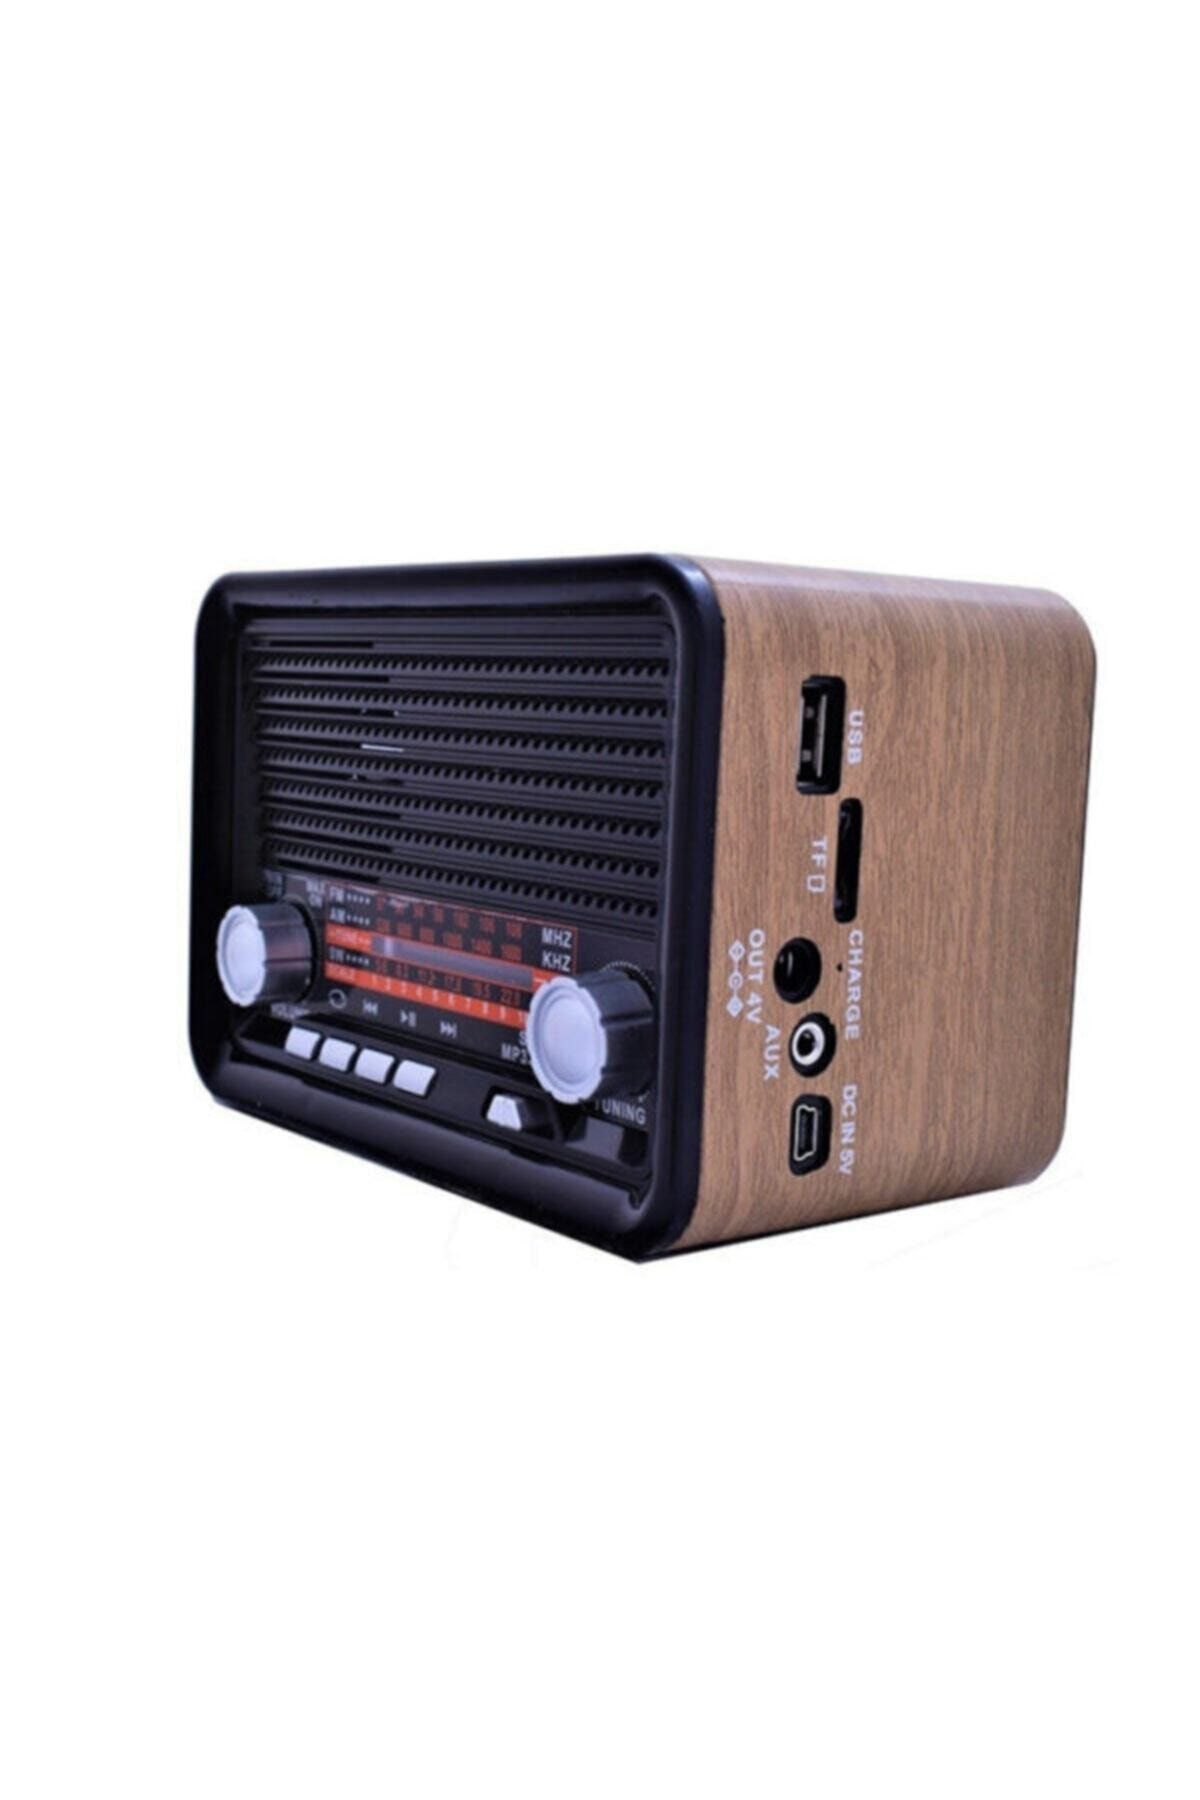 Genel Markalar Resmi Distribütör Garantili Nns Ns-1537bt Şarjlı Nostaljik Radyo Retro Ahşap Mp3 Çalar Kahverengi 2